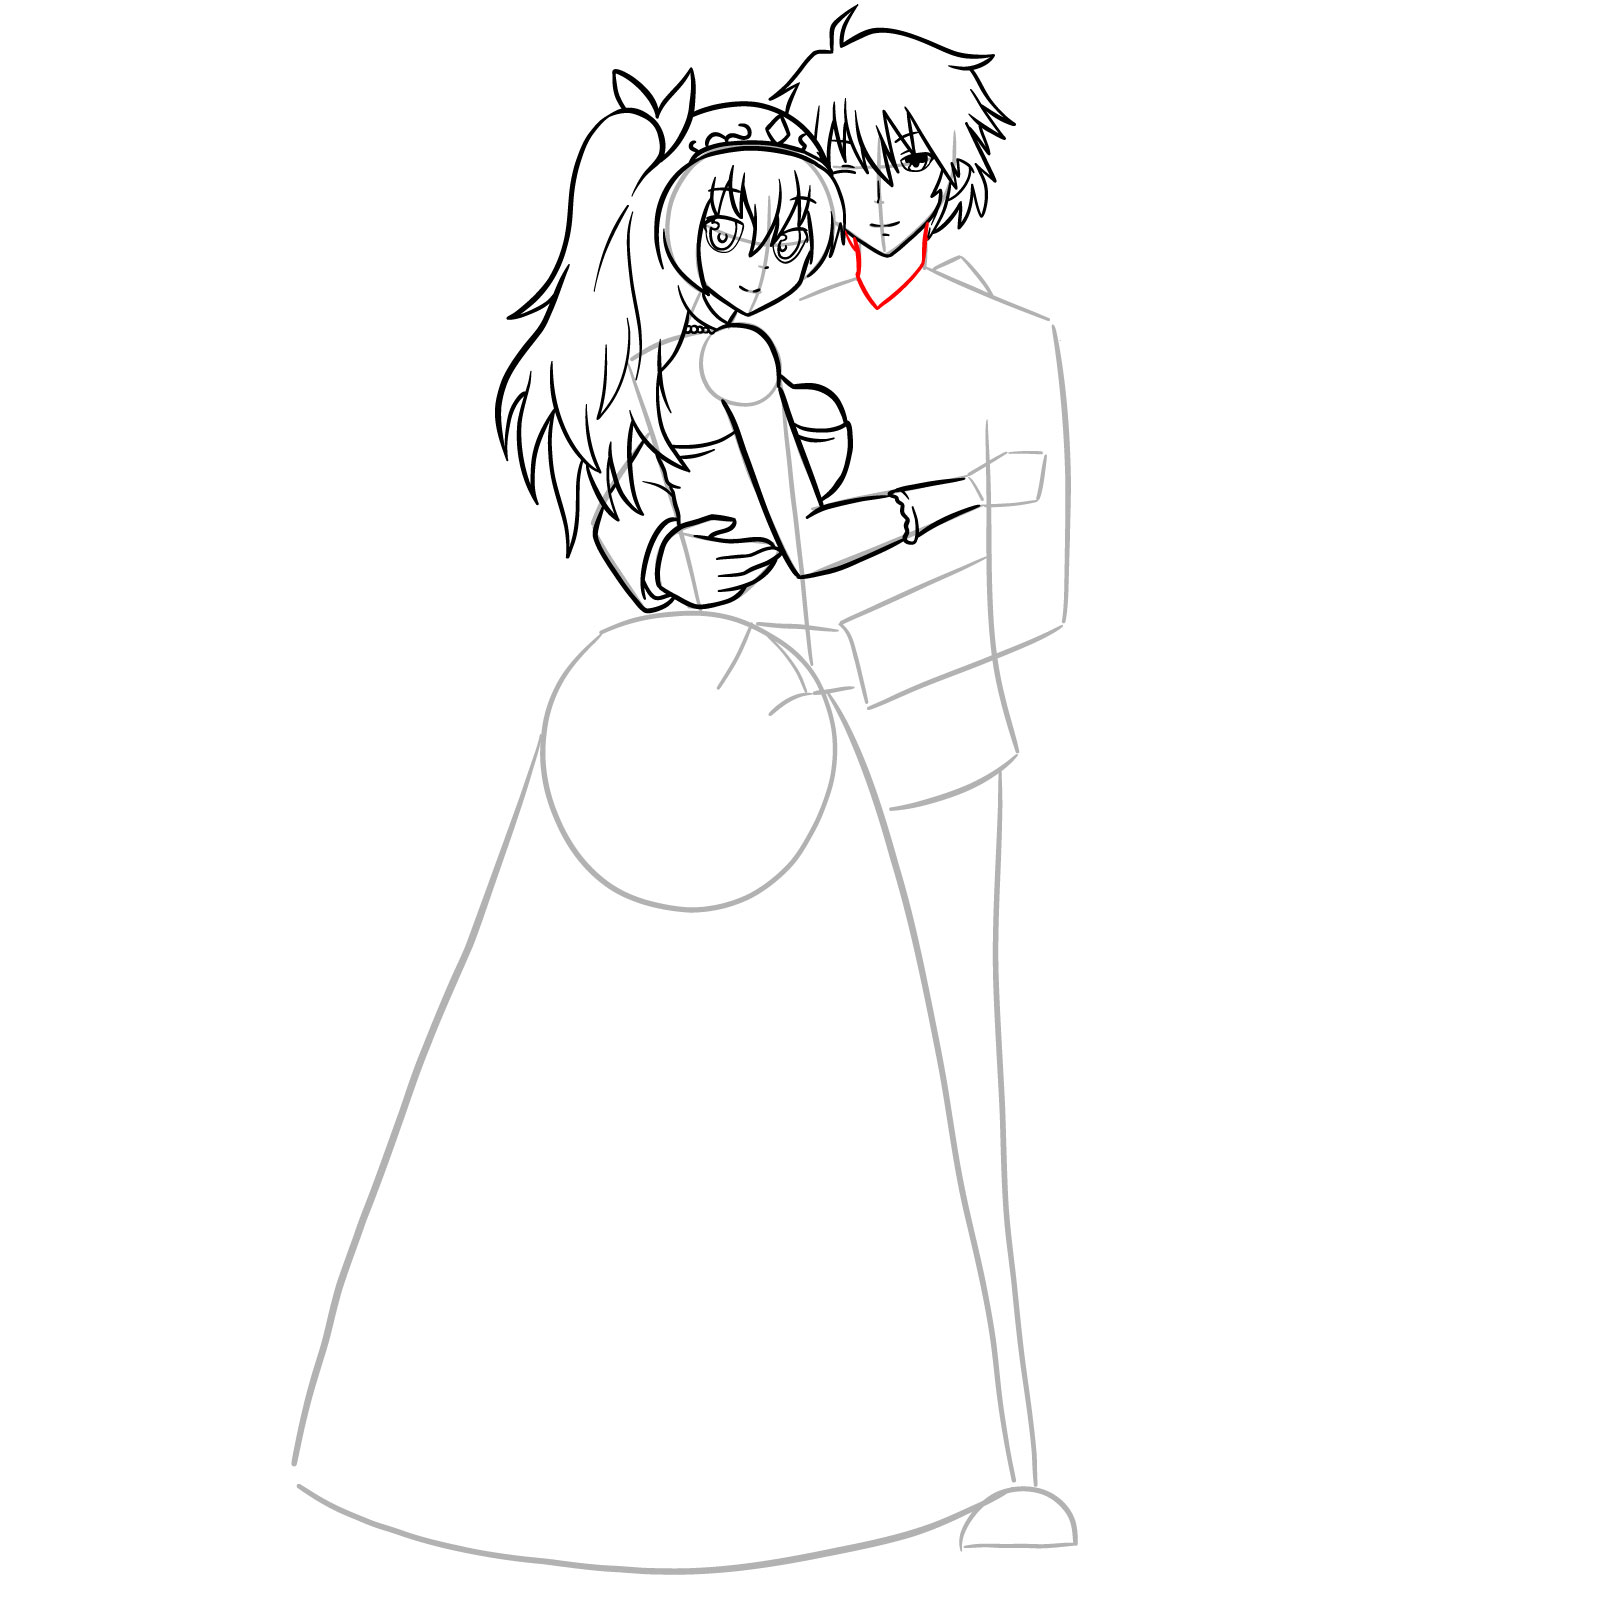 How to draw Ikki and Stella's wedding - step 33